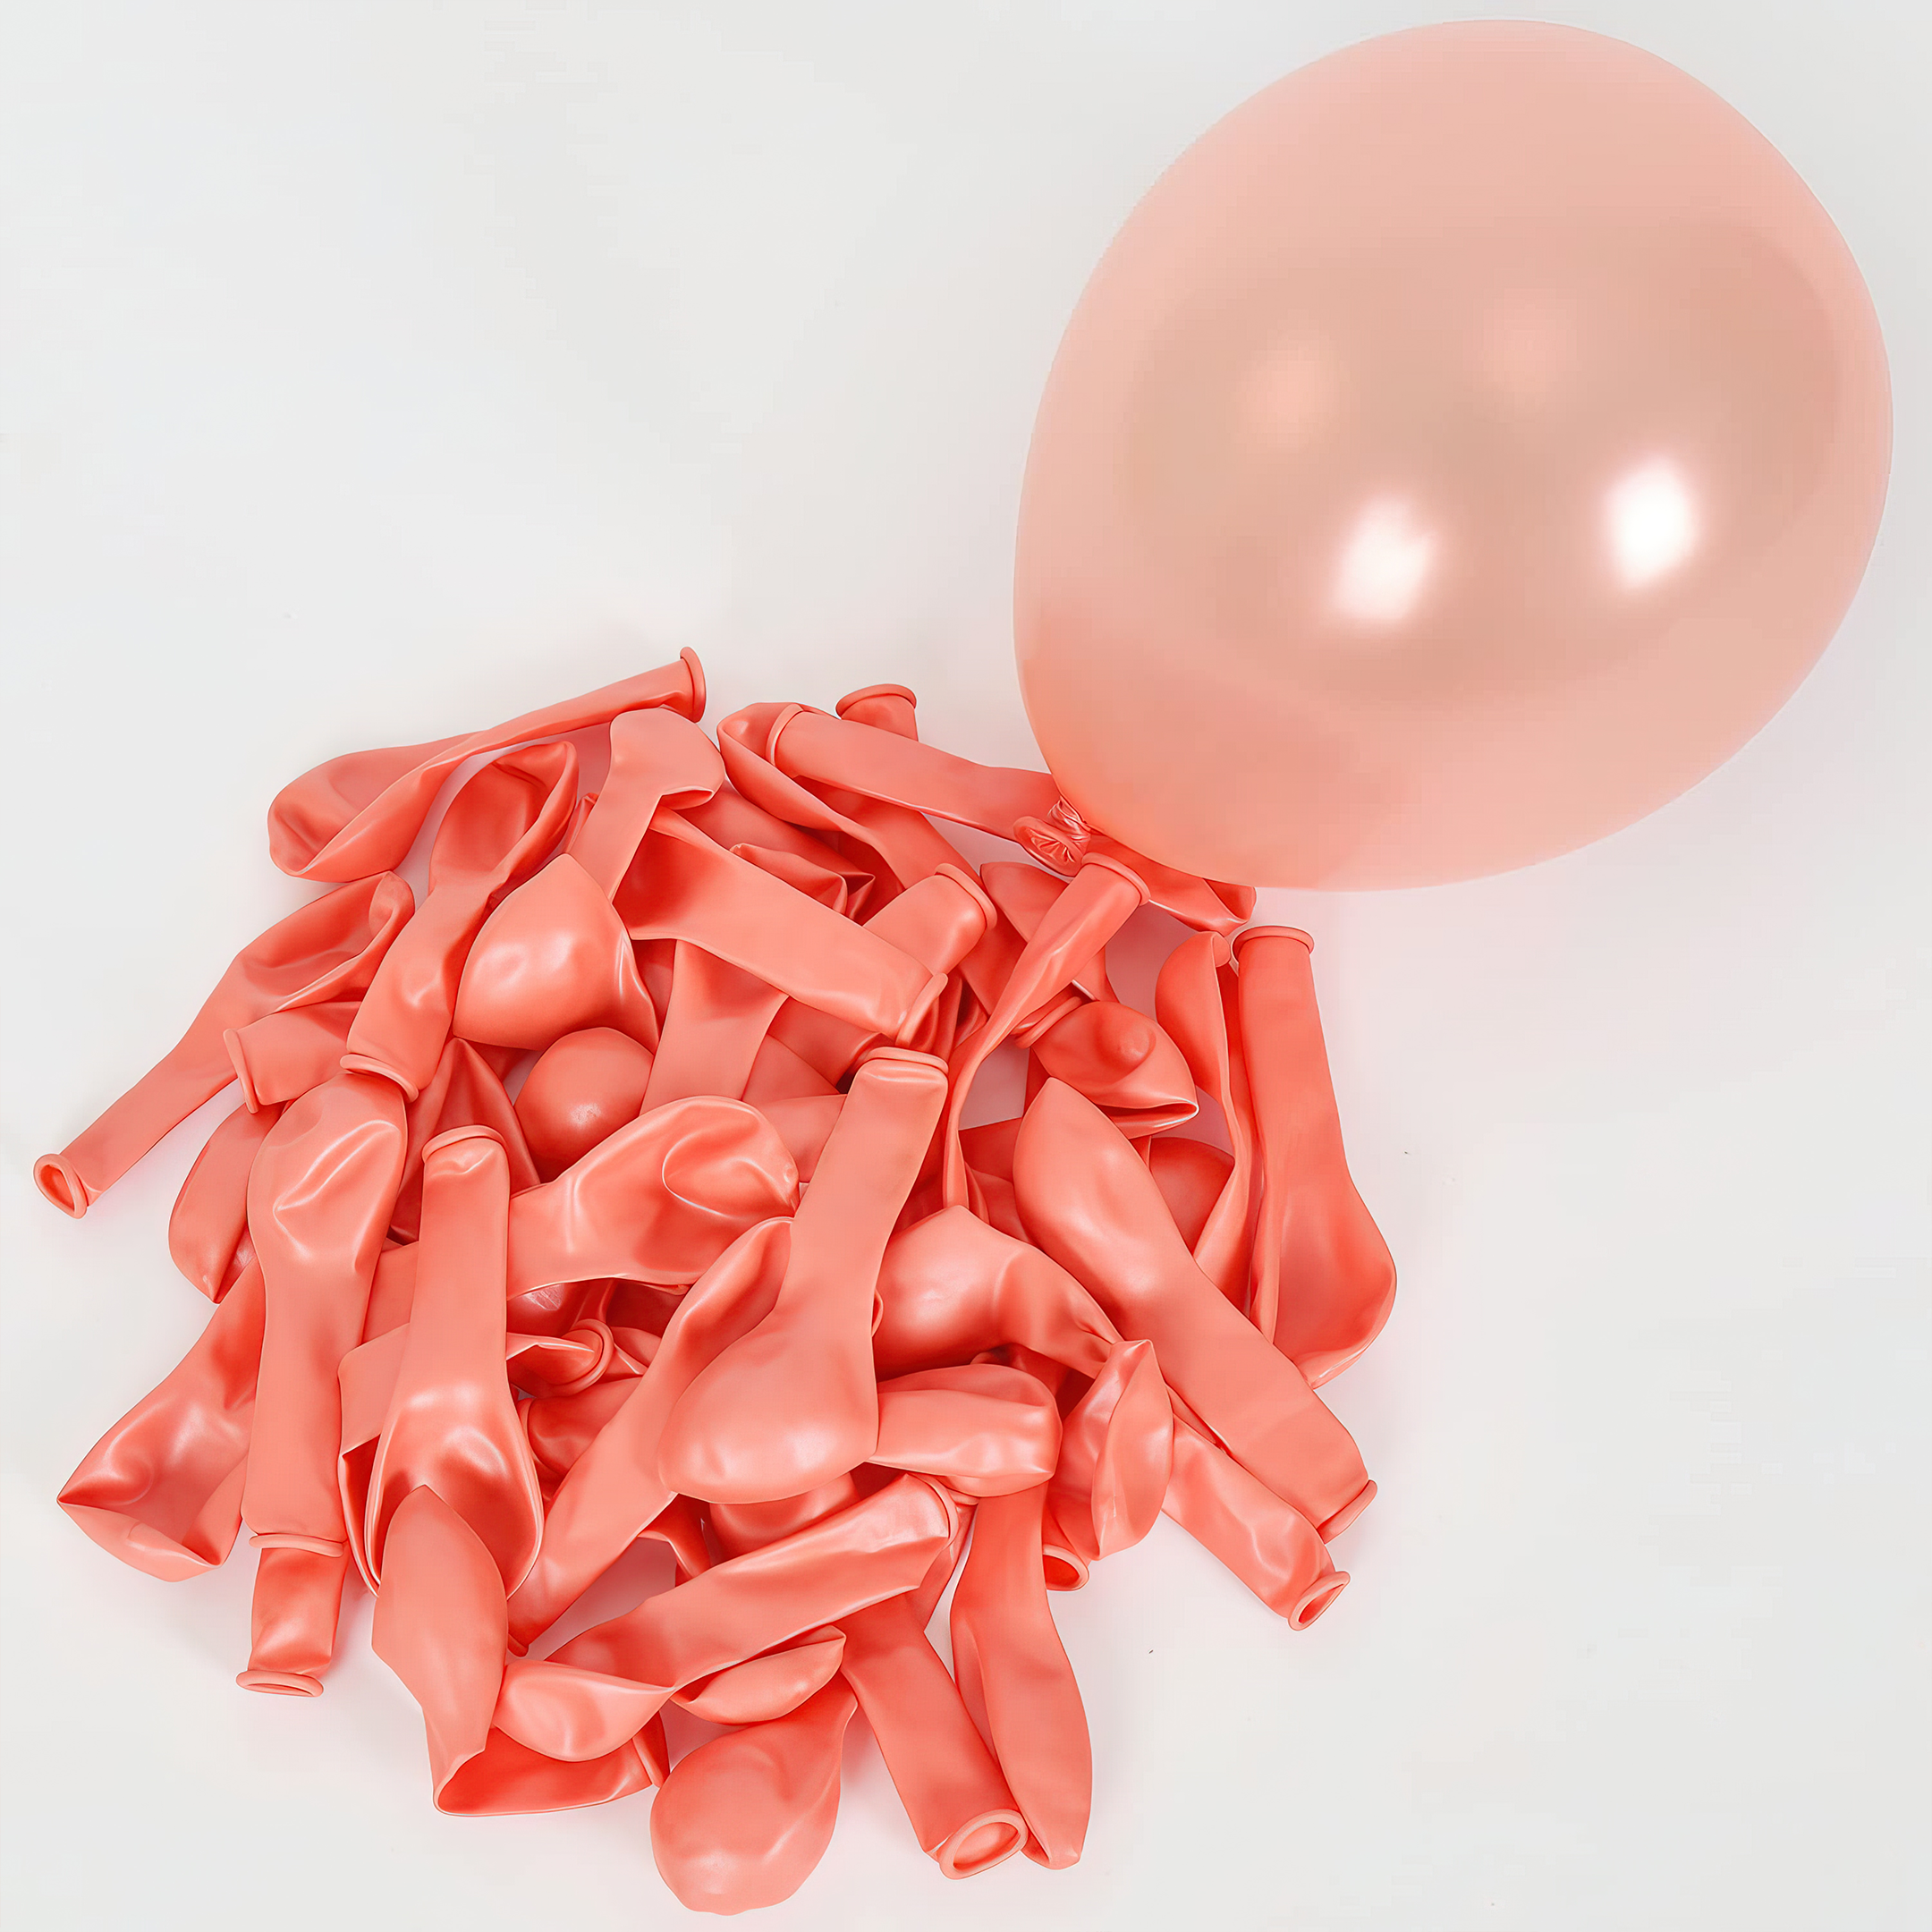 Birthday Rose Gold metallic balloons for decoration-100pcs